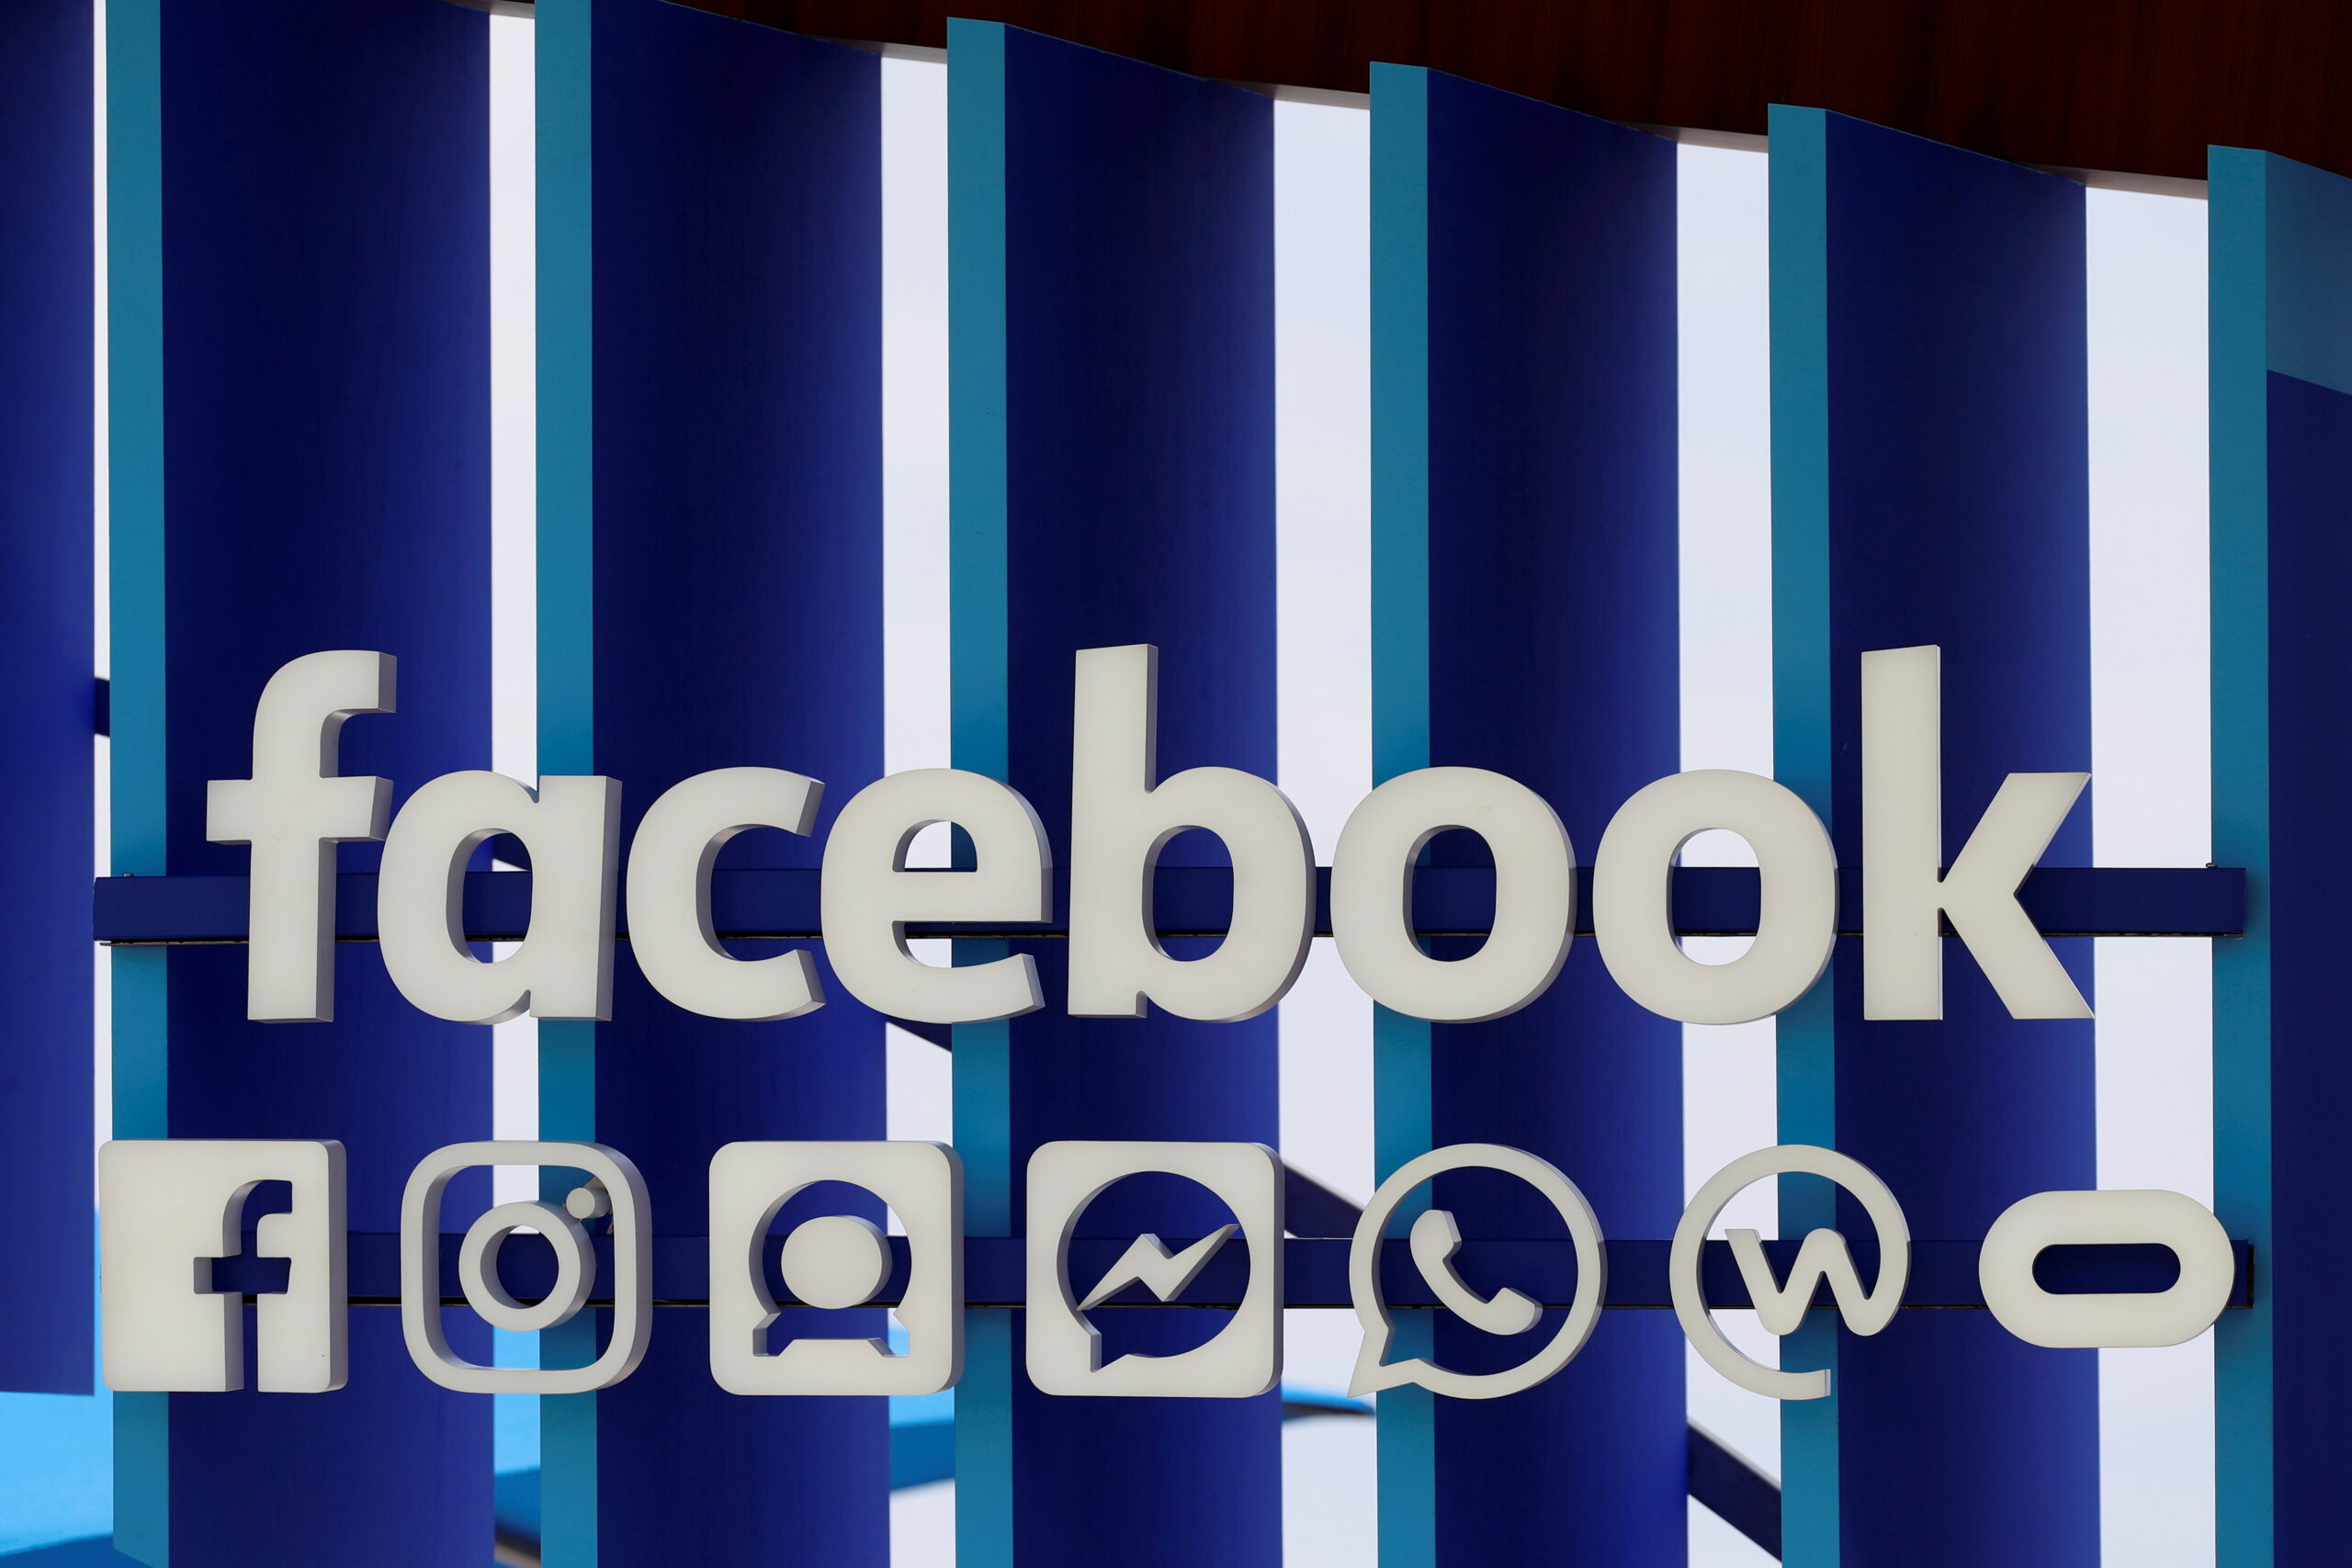  Facebook’s slowdown warning hangs over strong ad sales, while Zuckerberg talks ‘metaverse’